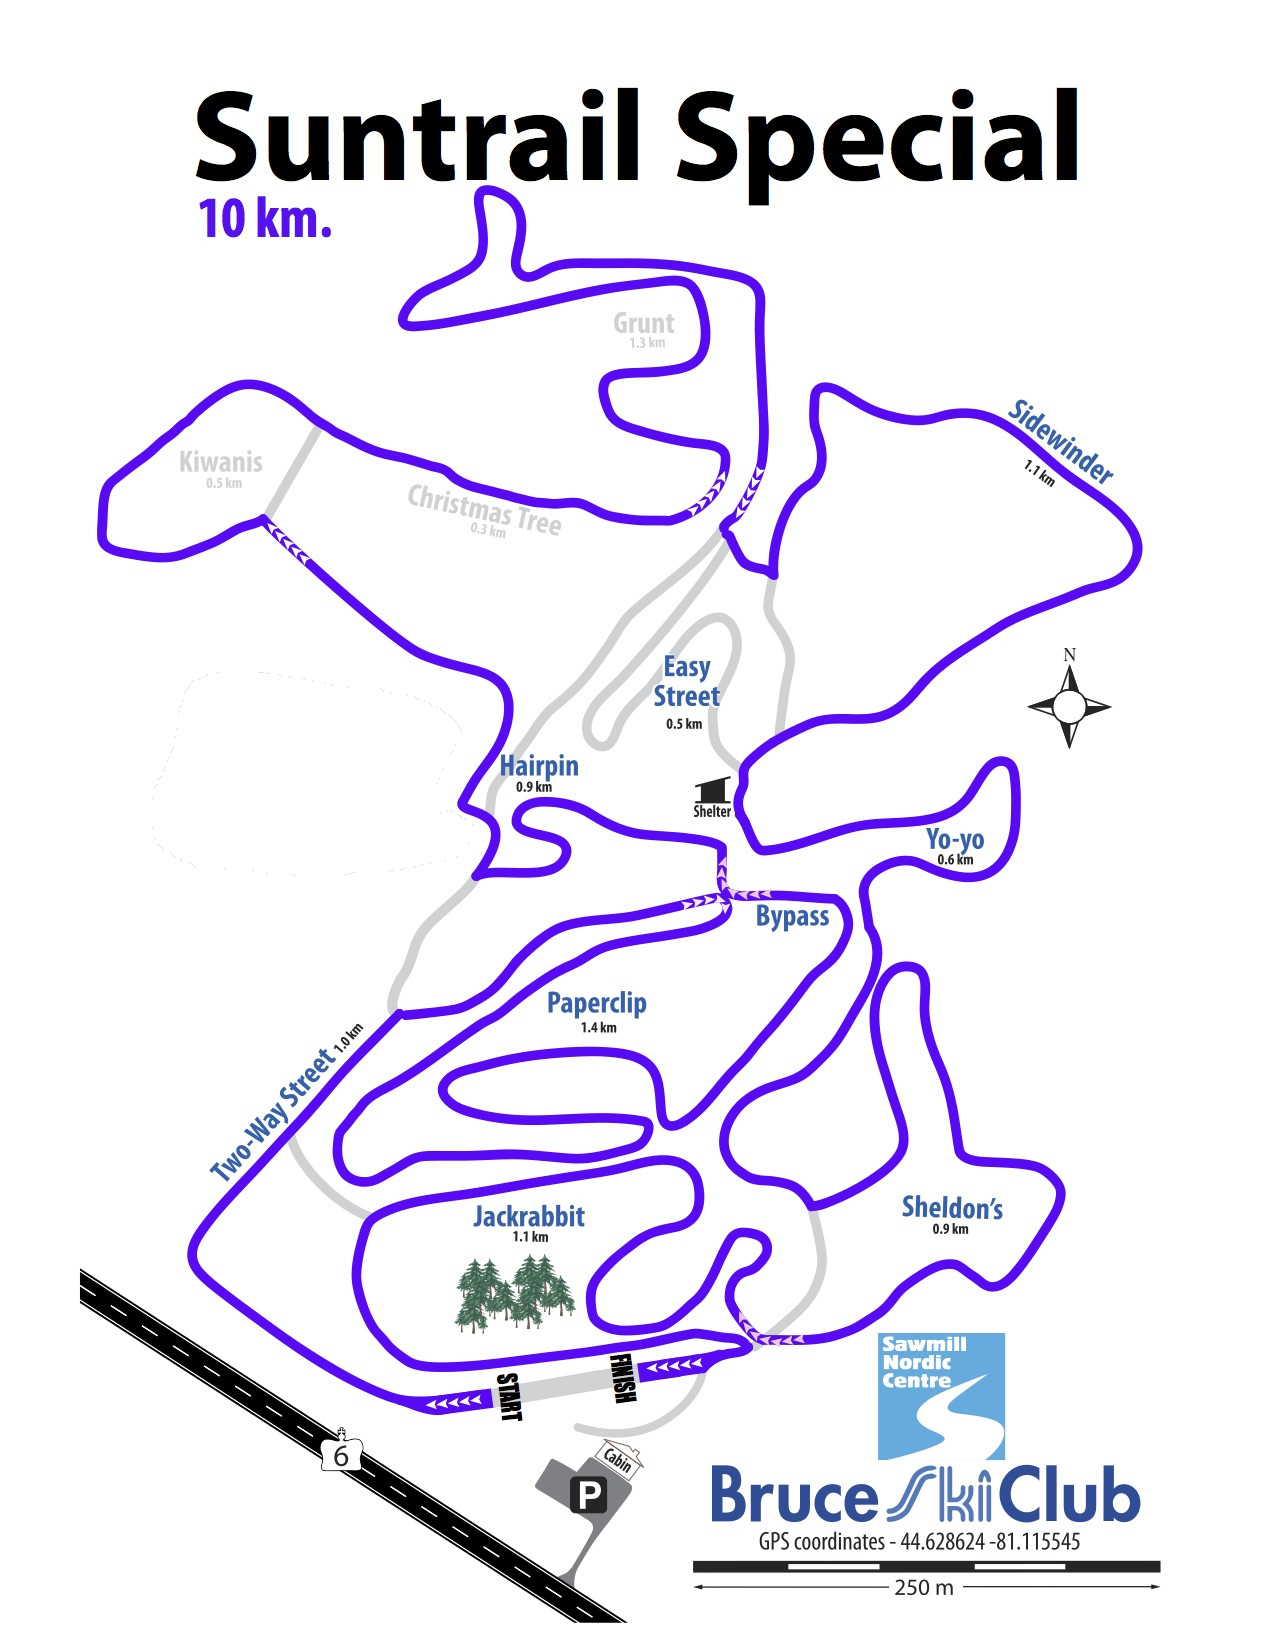 2019 Suntrail Special Cross-Country Ski Race Map – 10 km